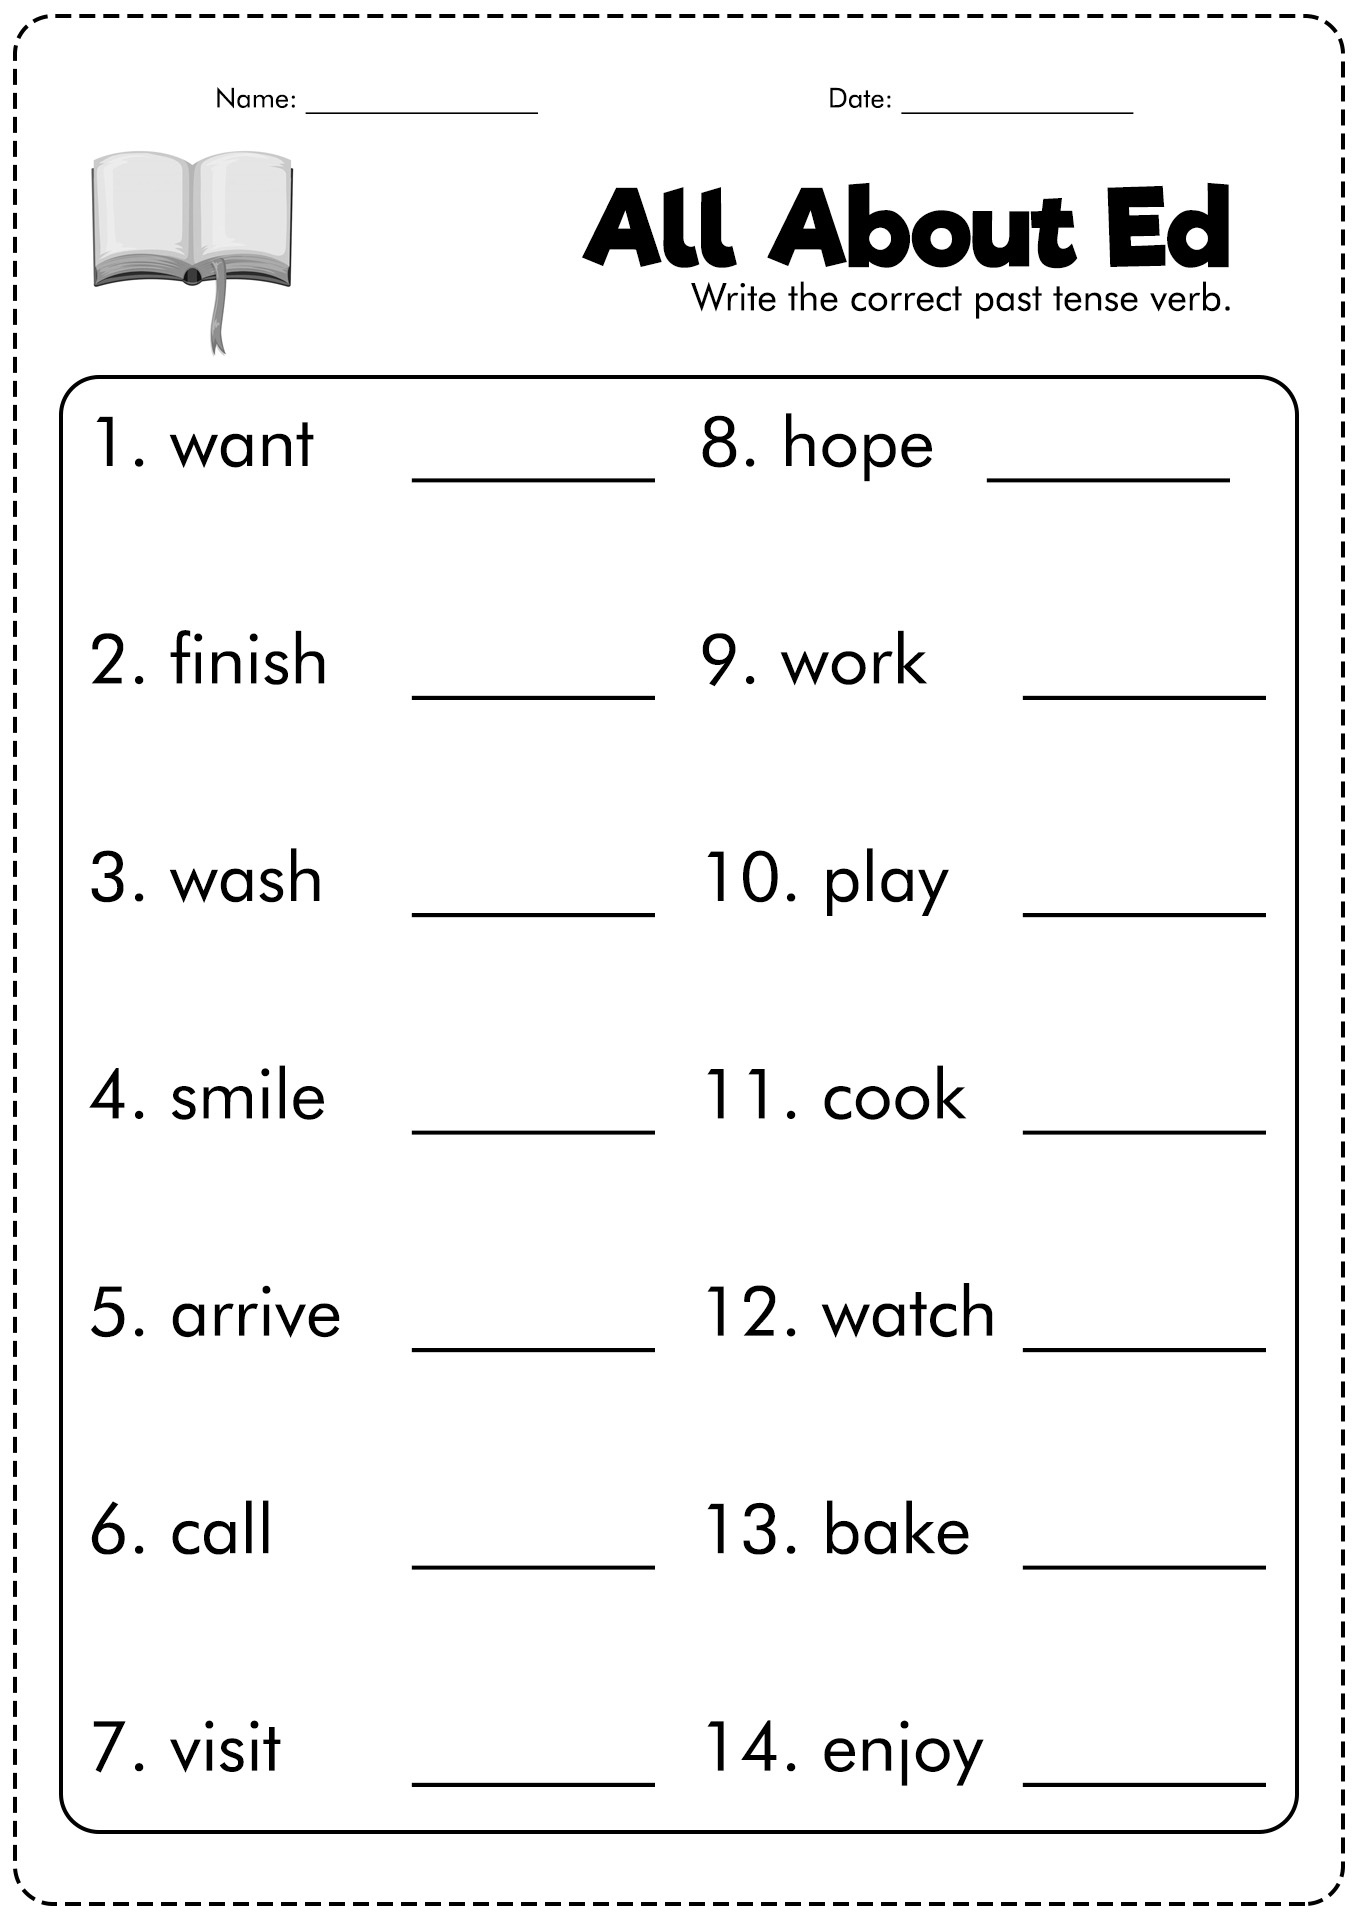 16 Best Images of Past Tense Verbs Worksheets 2nd Grade Verb Tense